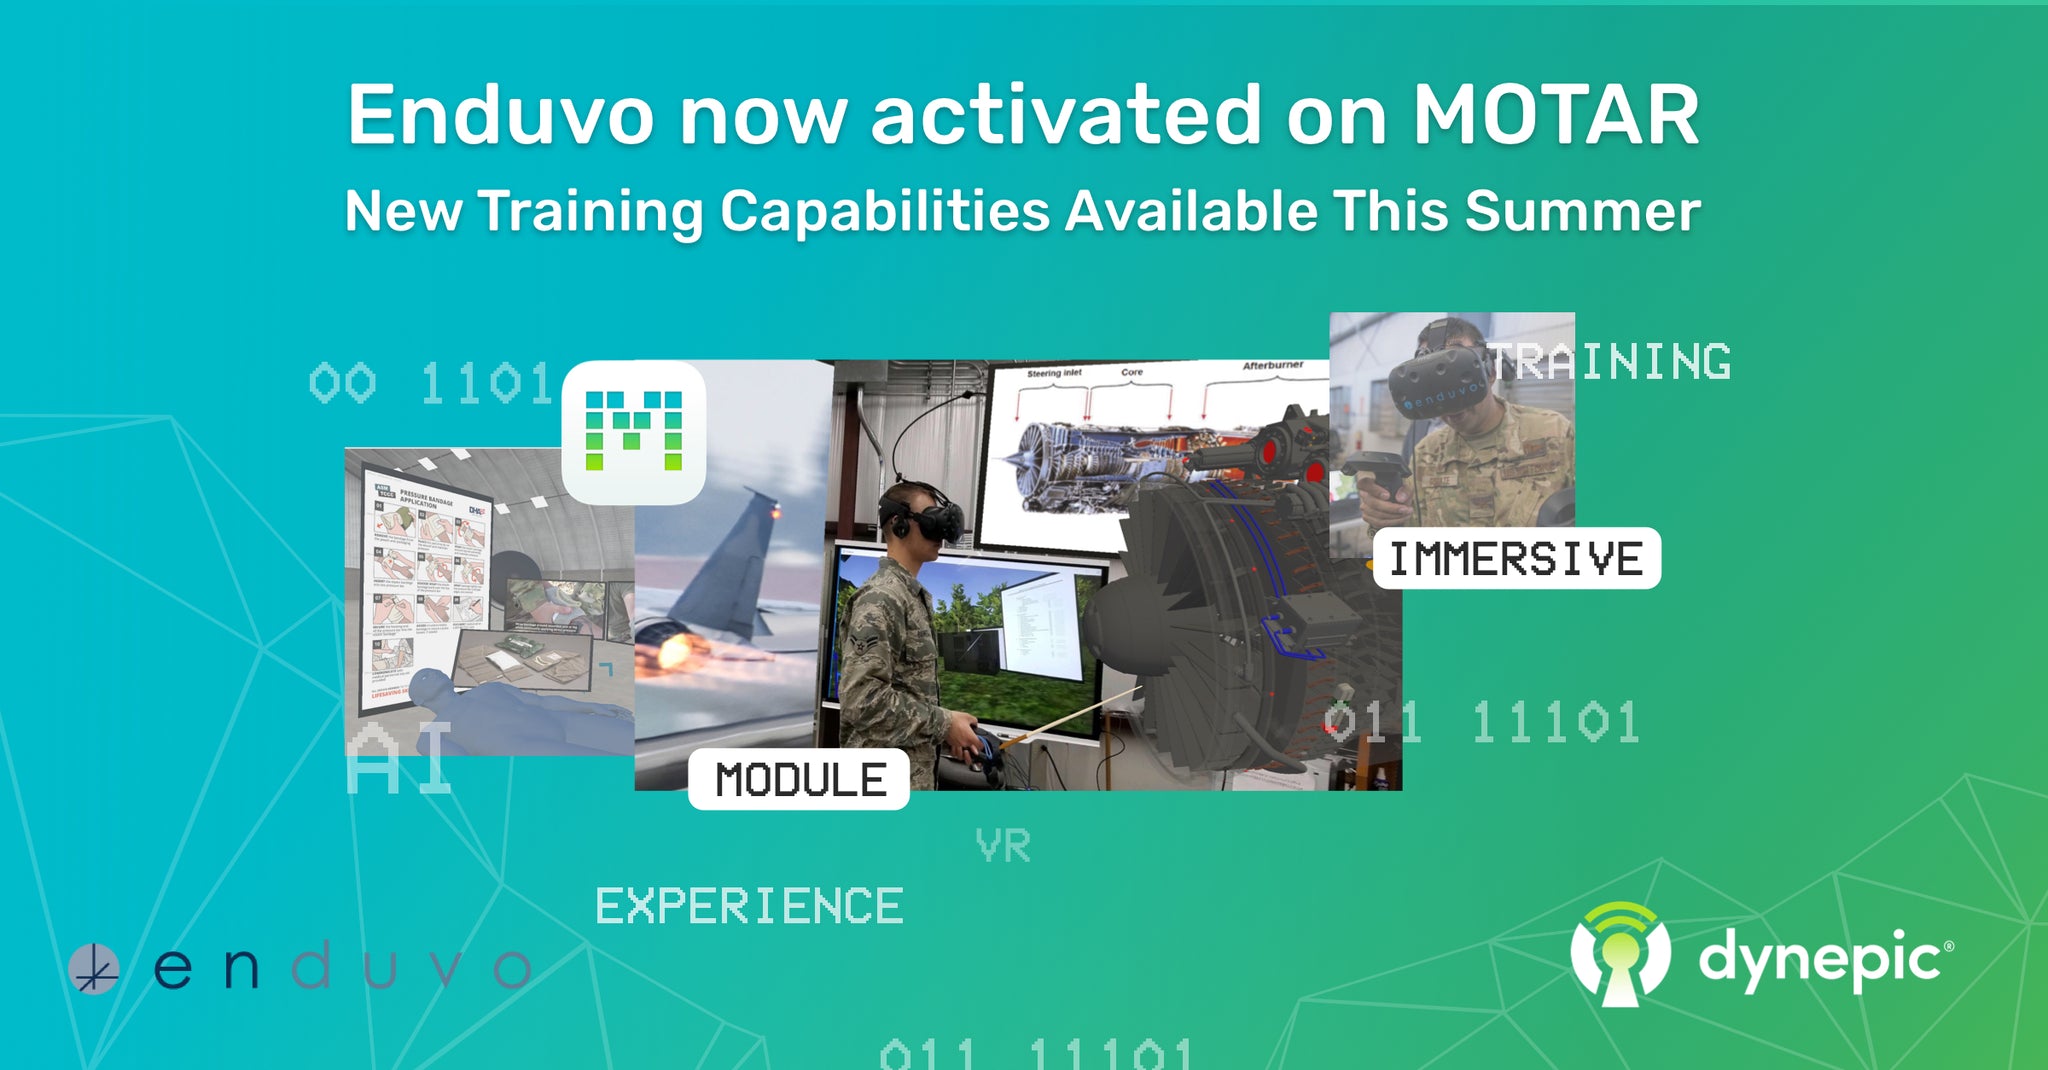 Enduvo Brings New, Immersive Training Capabilities to Dynepic’s MOTAR